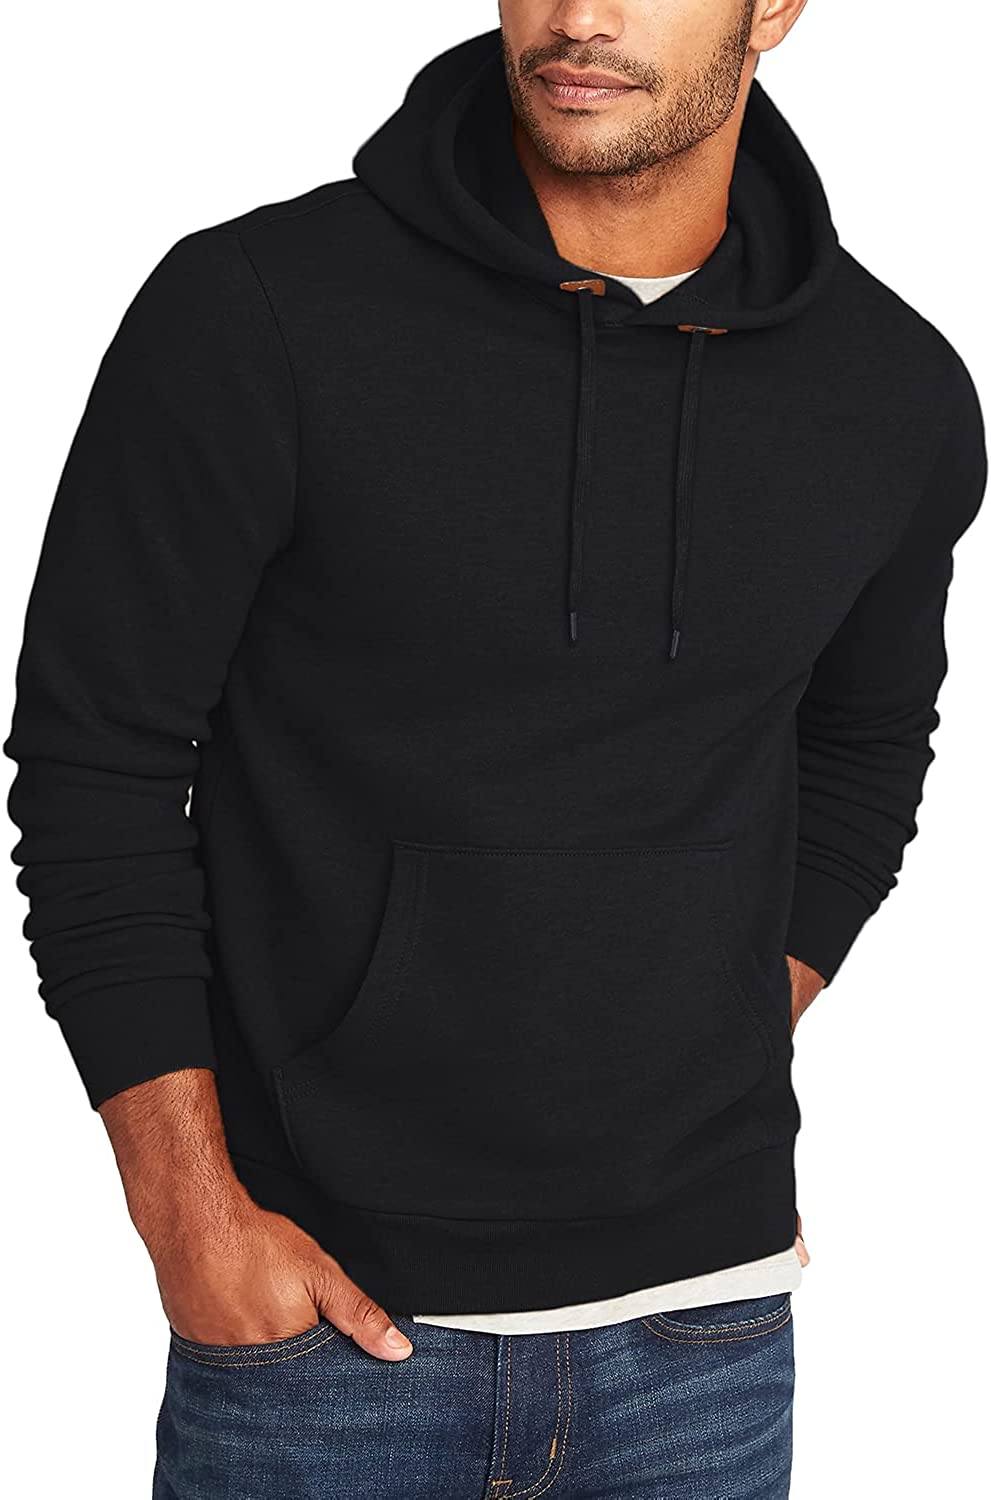 COOFANDY Men's Athletic Hoodie Long Sleeve Drawstring Sports Pullover Hooded Casual Fashion Sweatshirt with Pockets Fashion Hoodies & Sweatshirts Coofandy's Black Small 